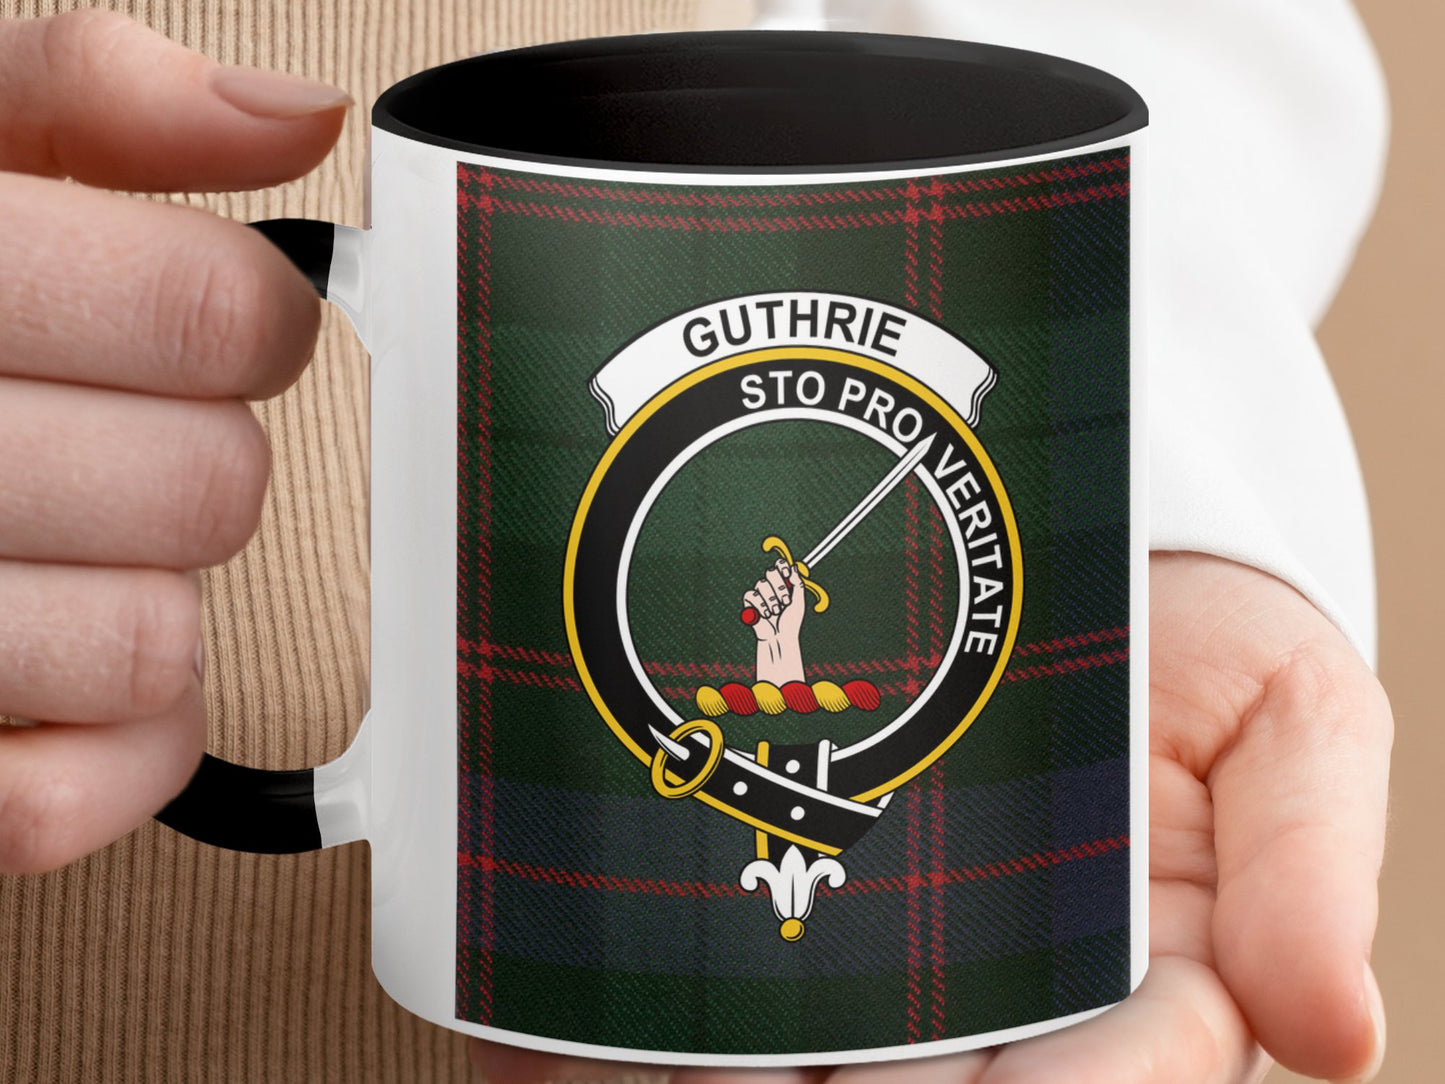 Clan Guthrie Sto Pro Veritate Scottish Tartan Mug - Living Stone Gifts